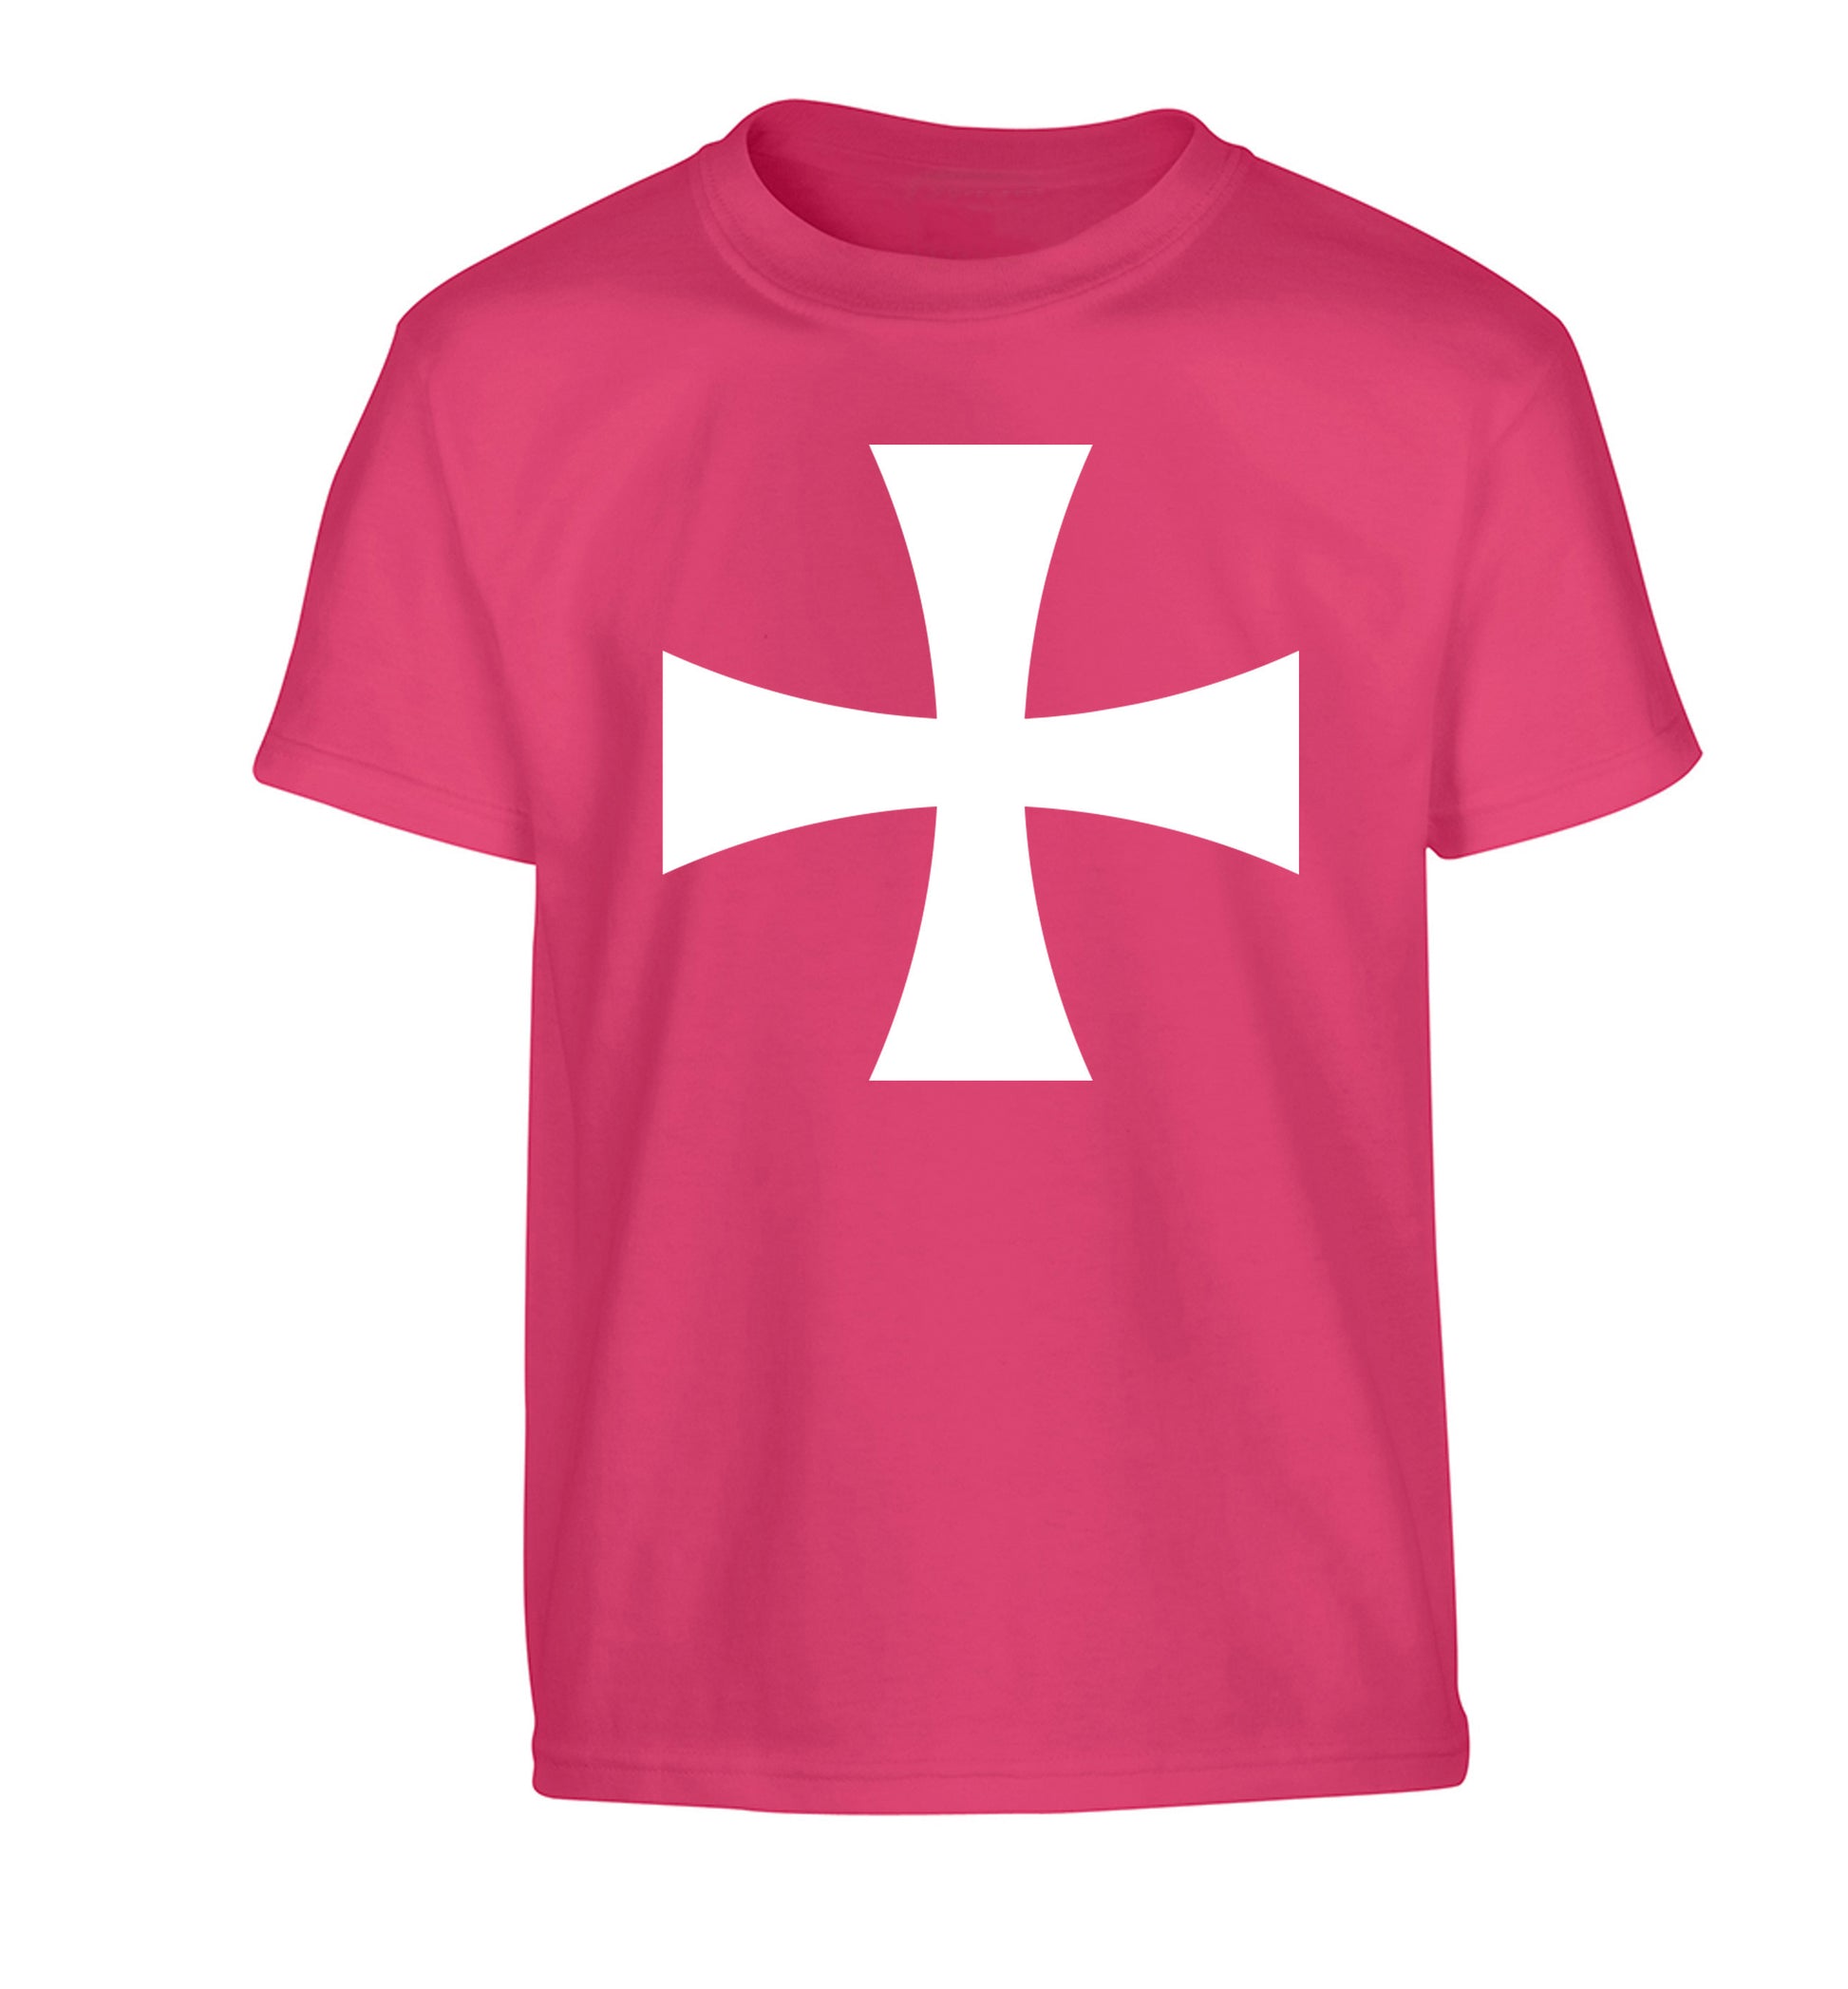 Knights Templar cross Children's pink Tshirt 12-14 Years